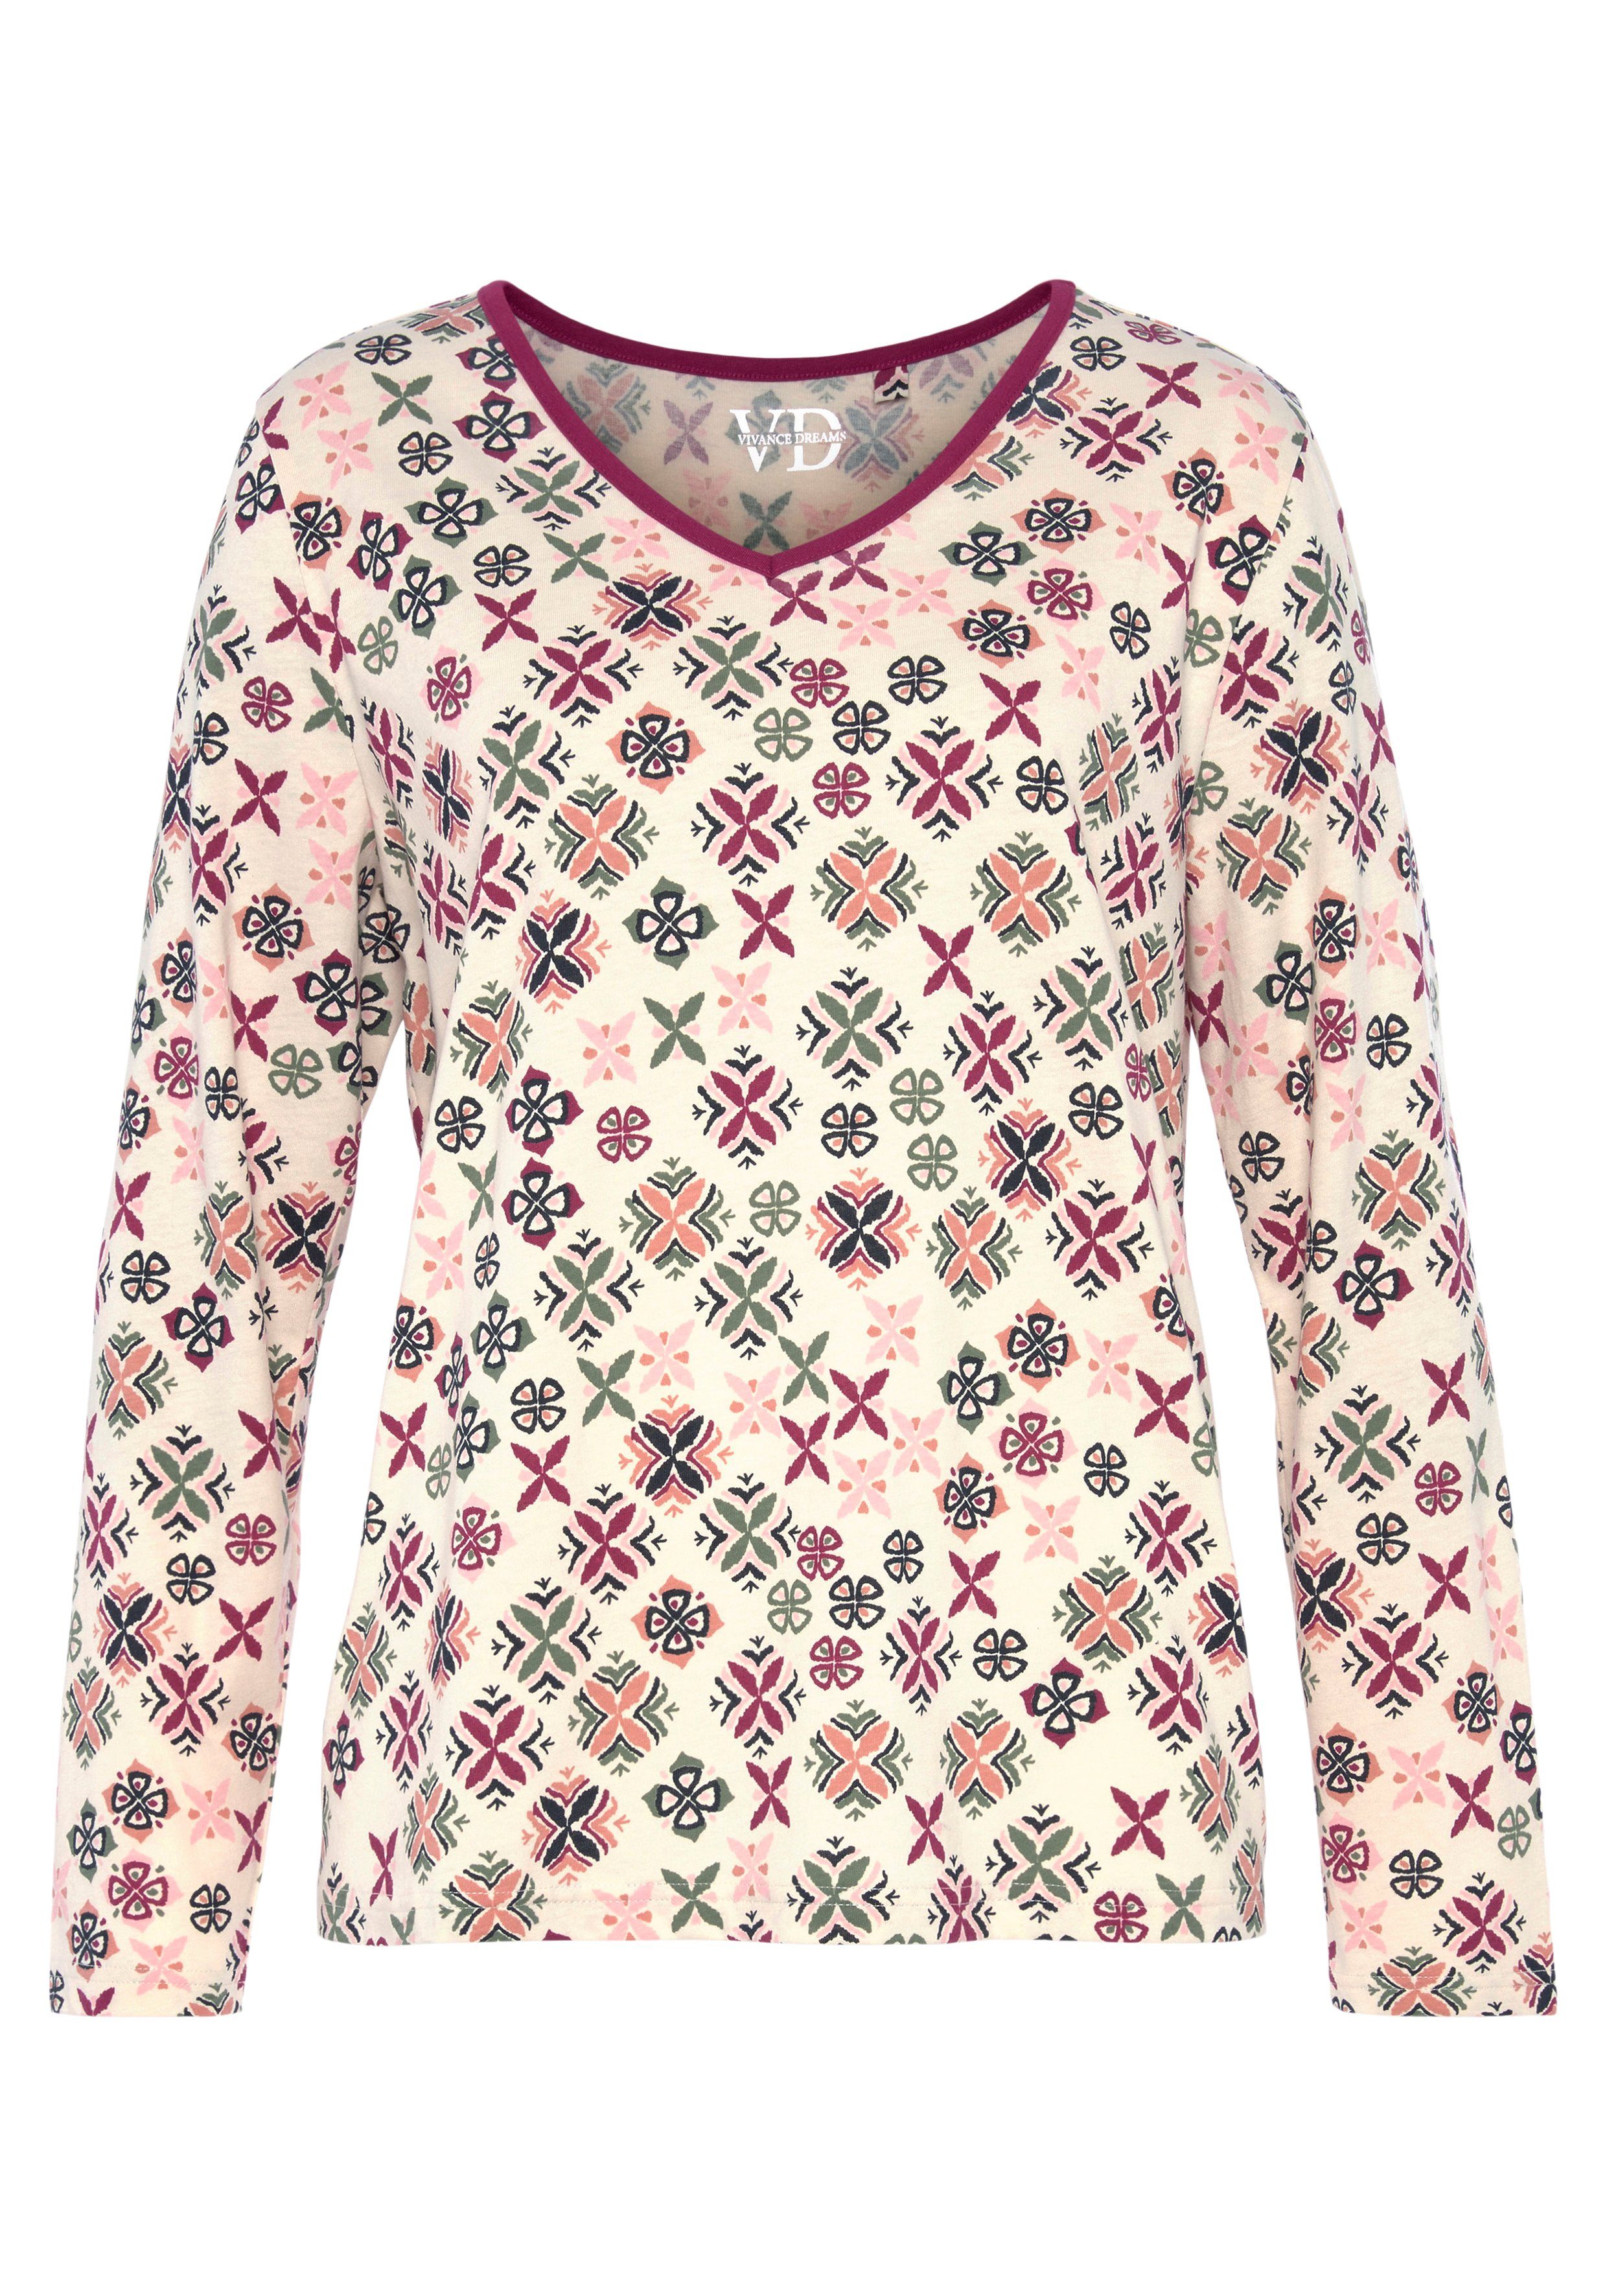 Vivance Dreams Pyjama burgunder-gemustert 2 (Packung, tlg) Alloverdruck grafisch-floralem mit